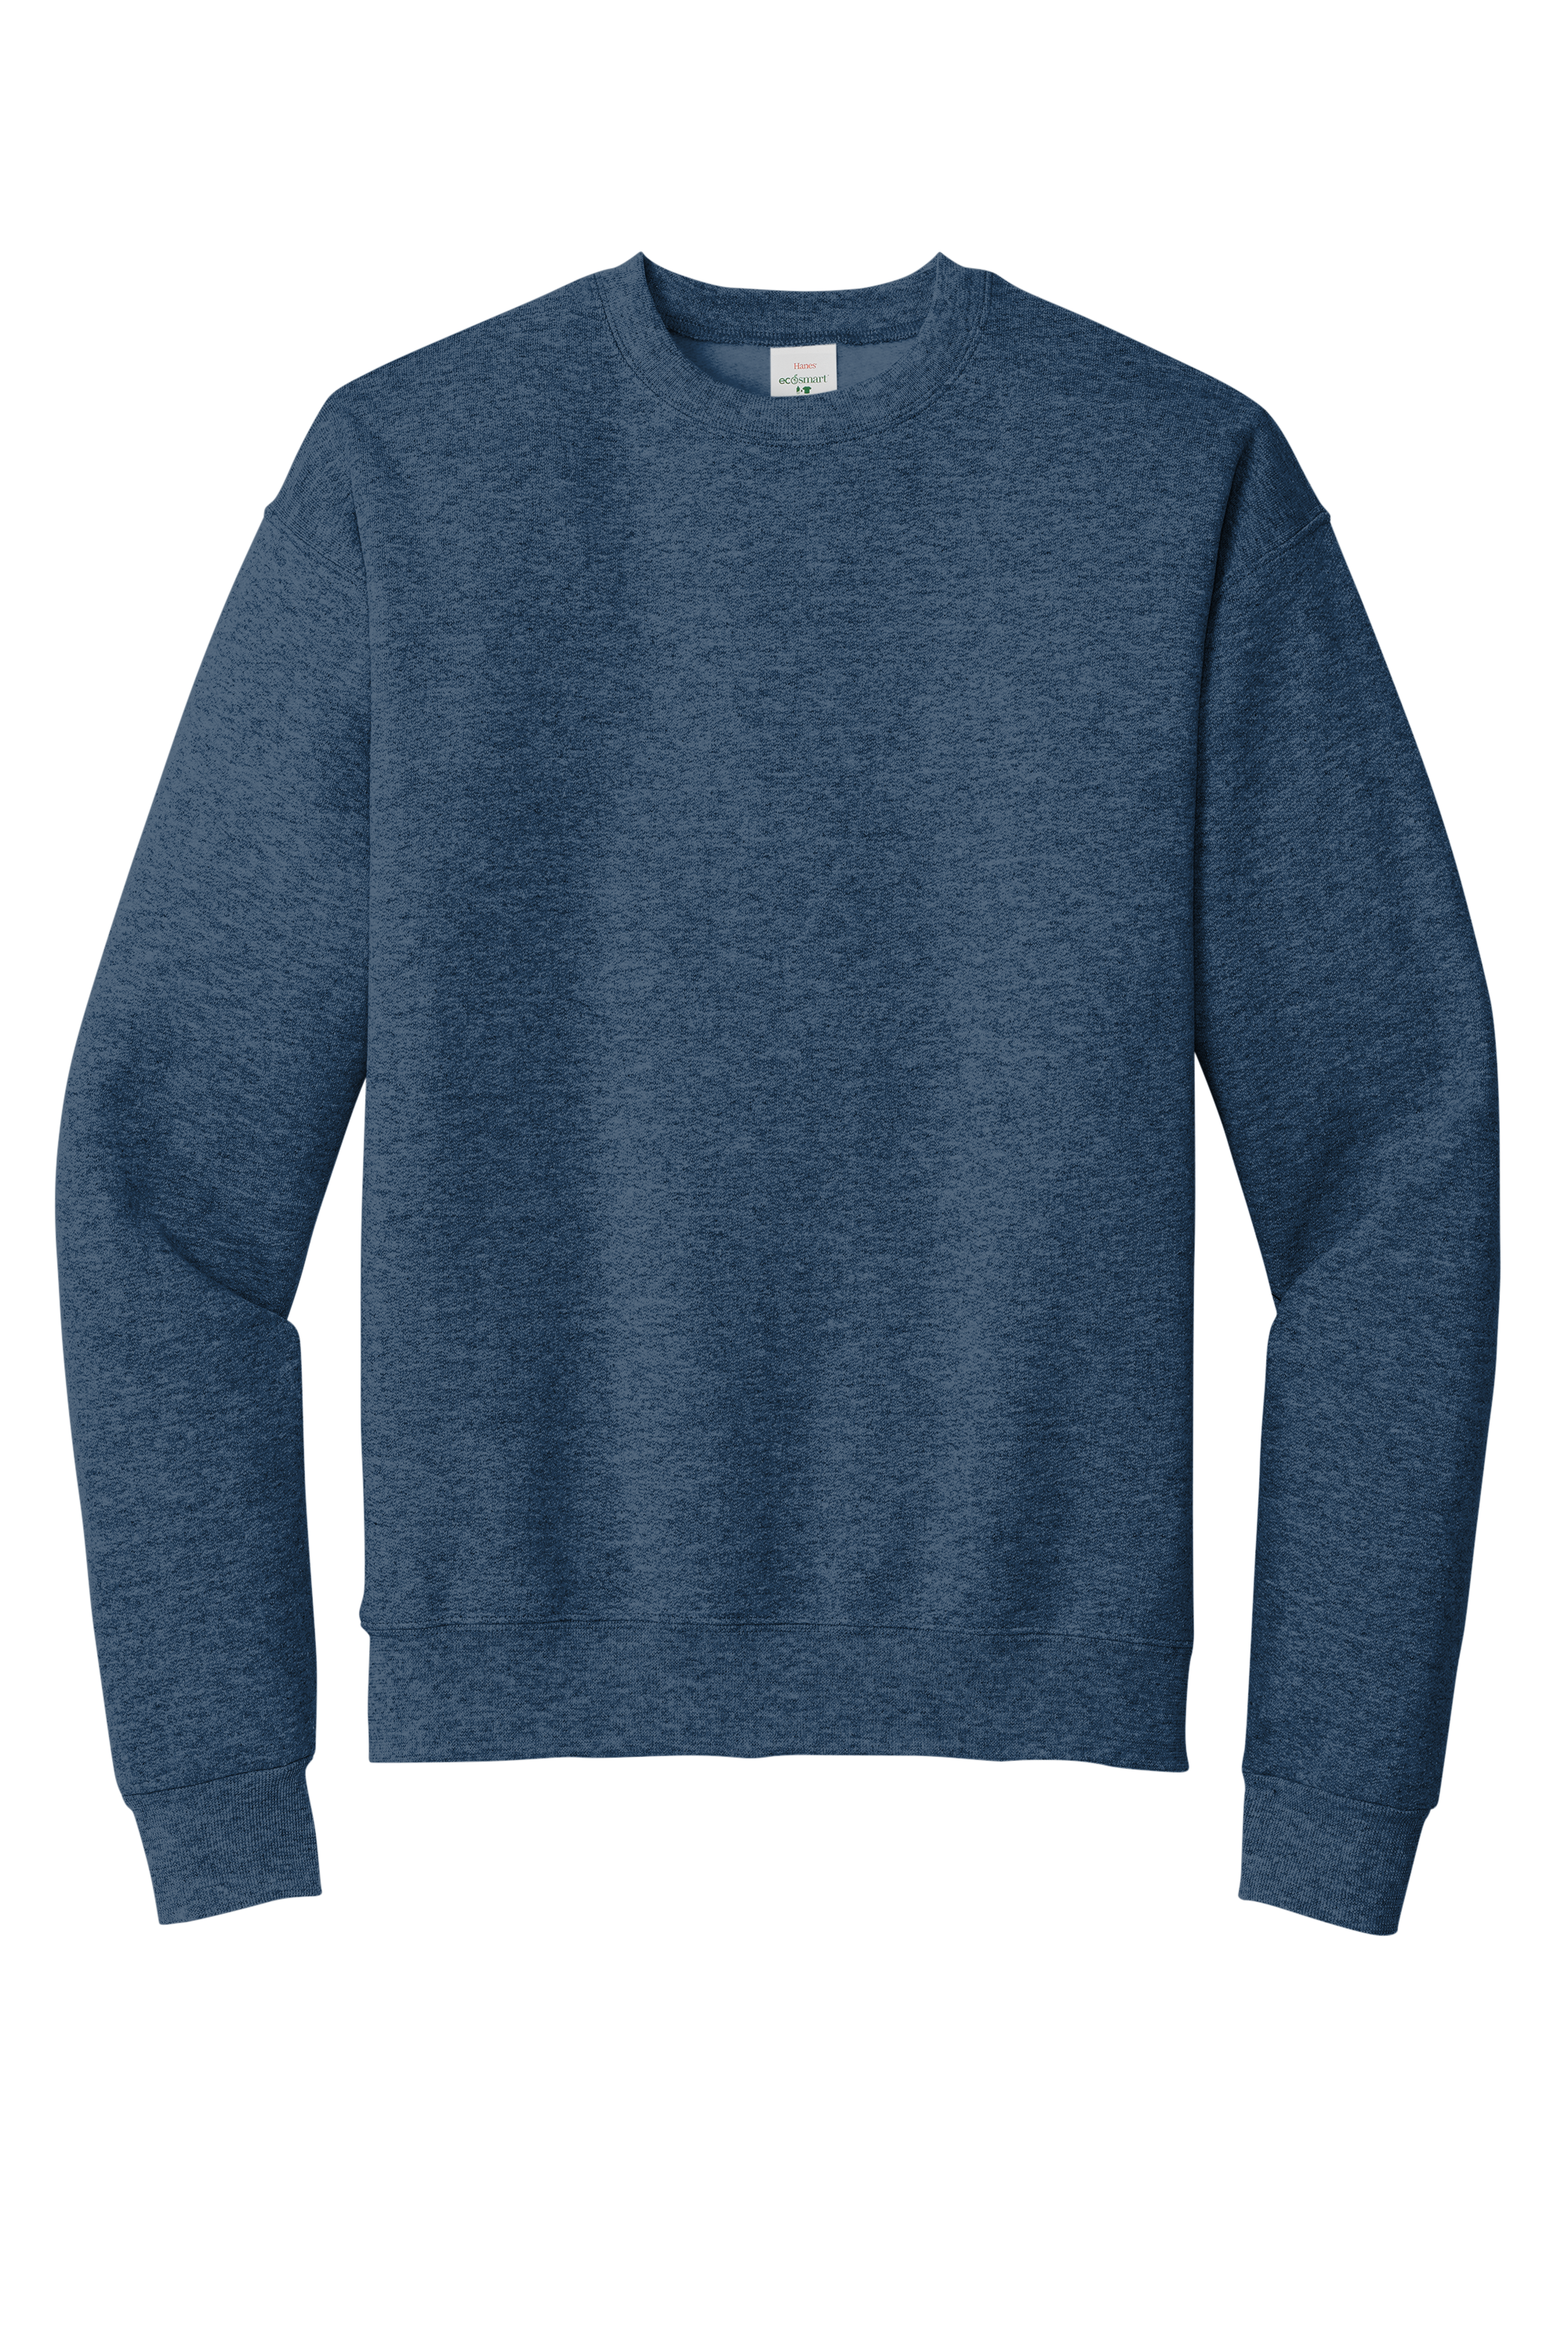 Custom Hanes Crewneck Sweatshirt